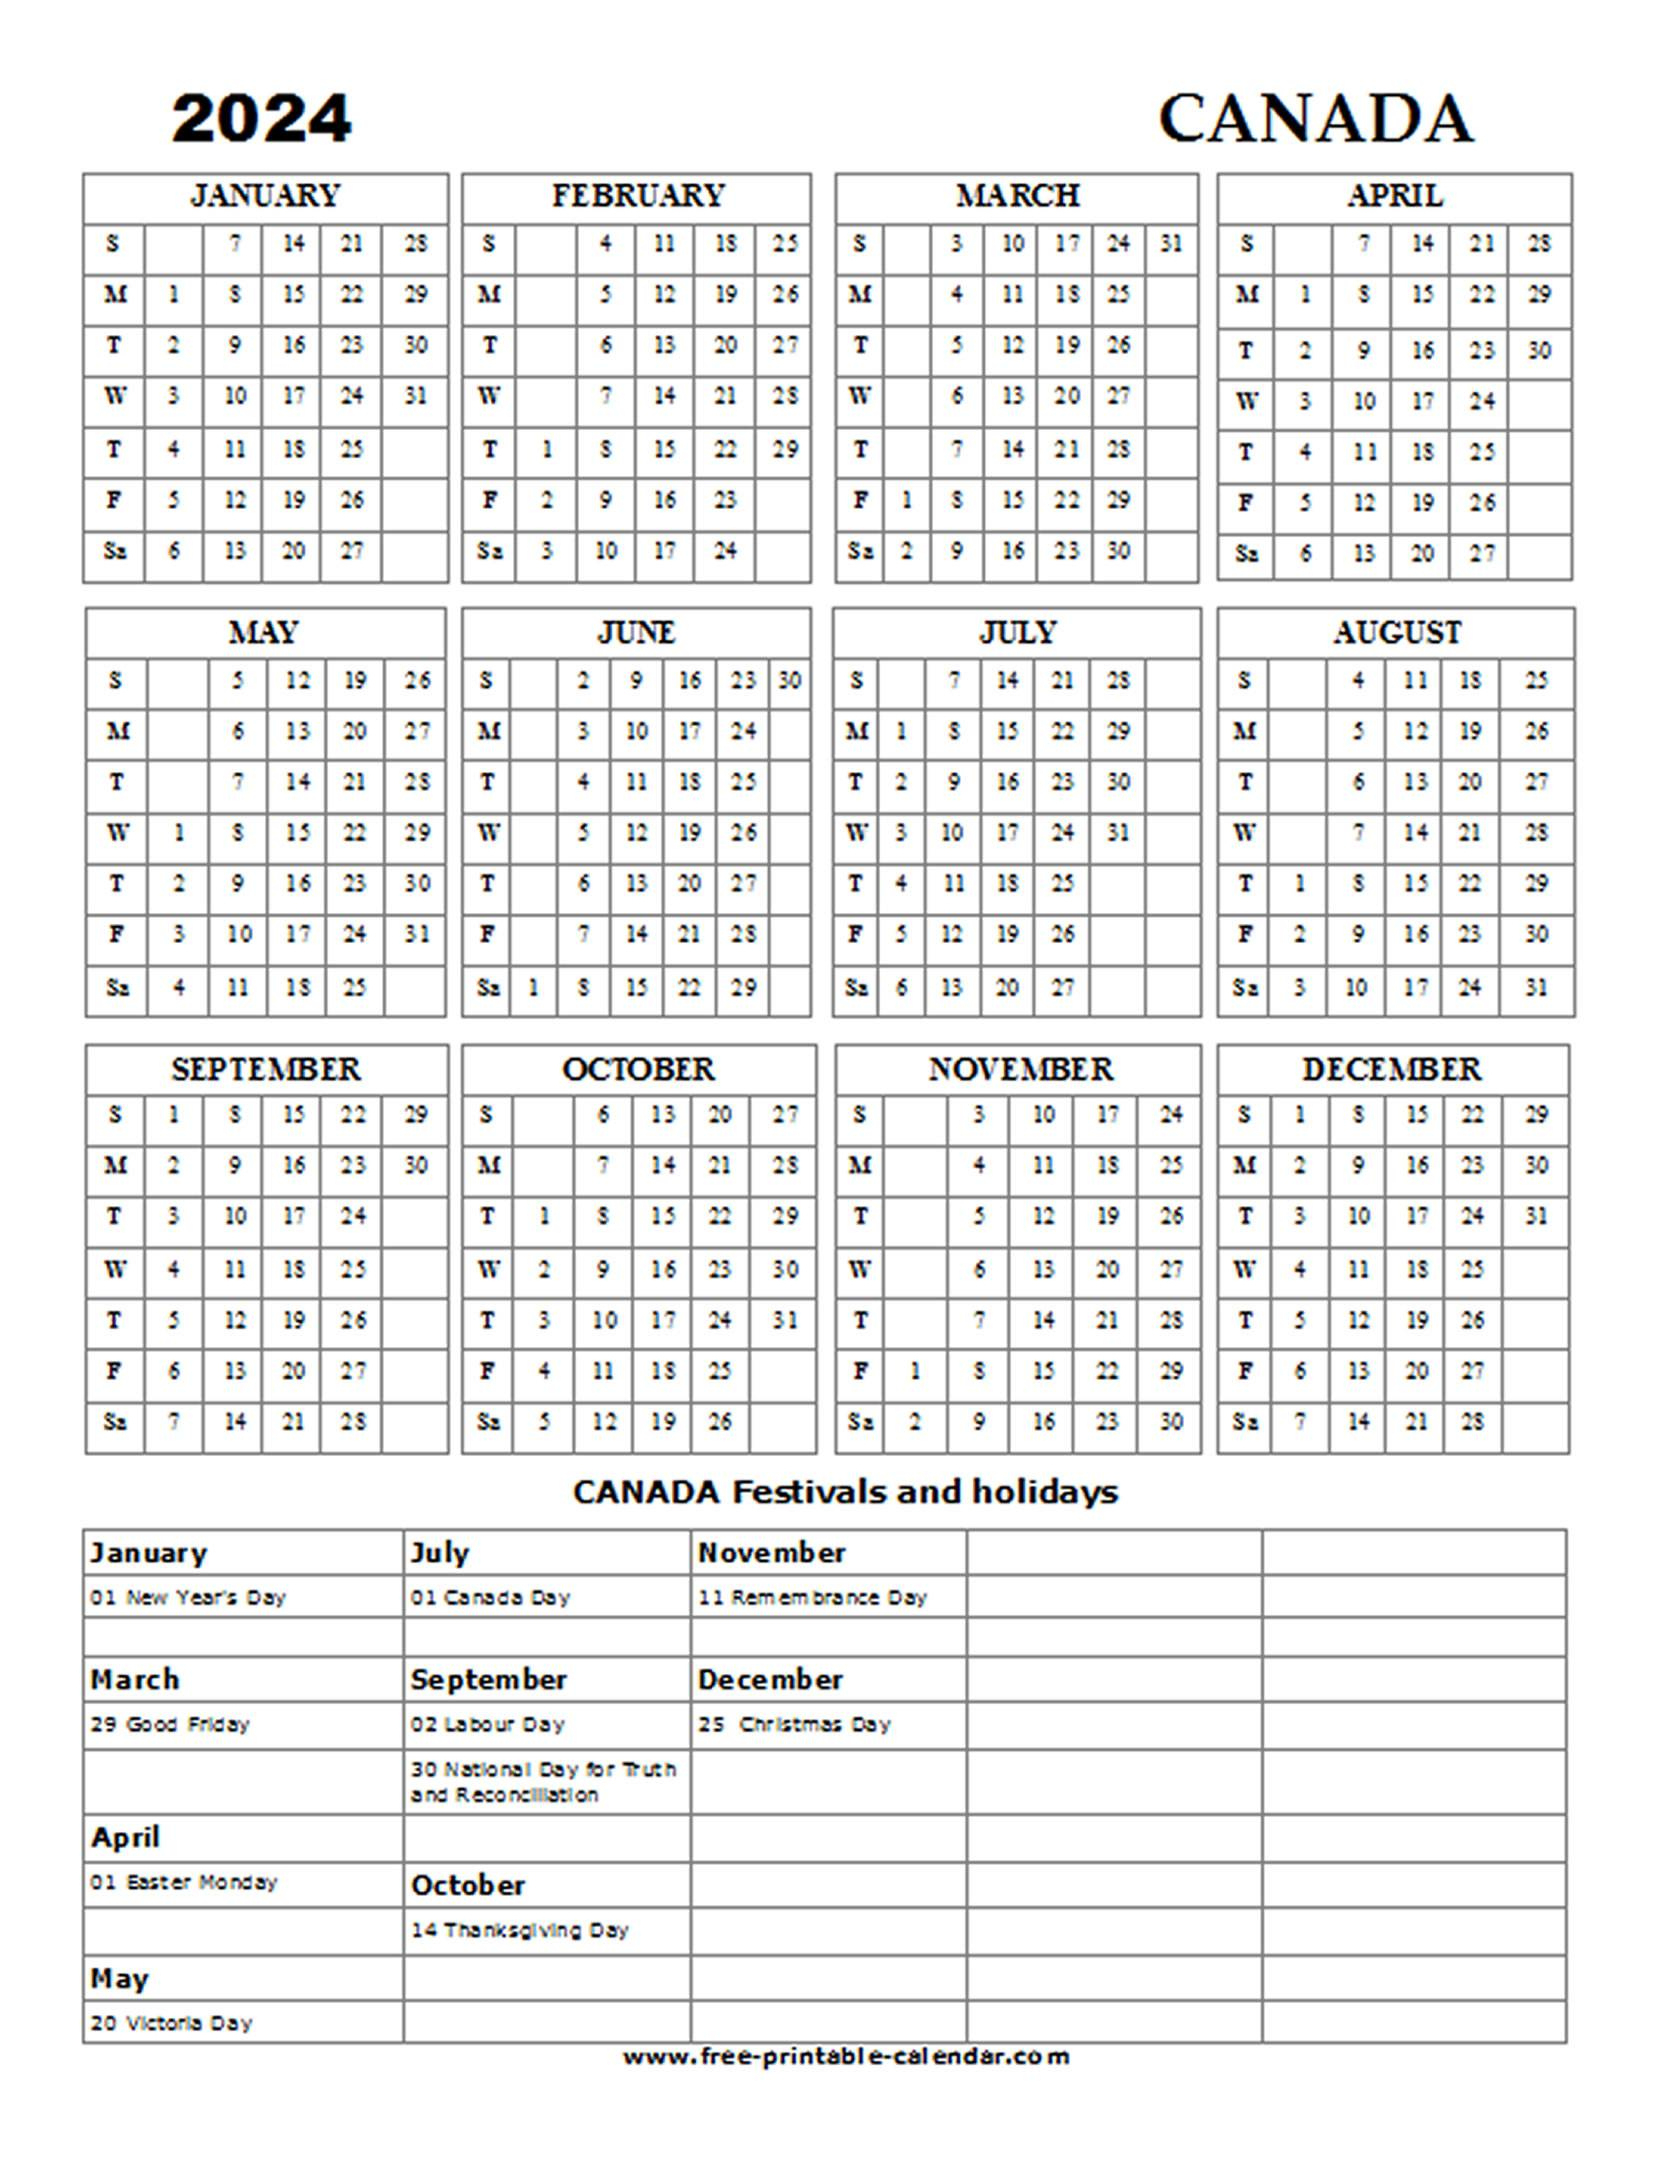 2024 Canada Holiday Calendar - Free-Printable-Calendar | Free Printable Calendar 2024 Canada